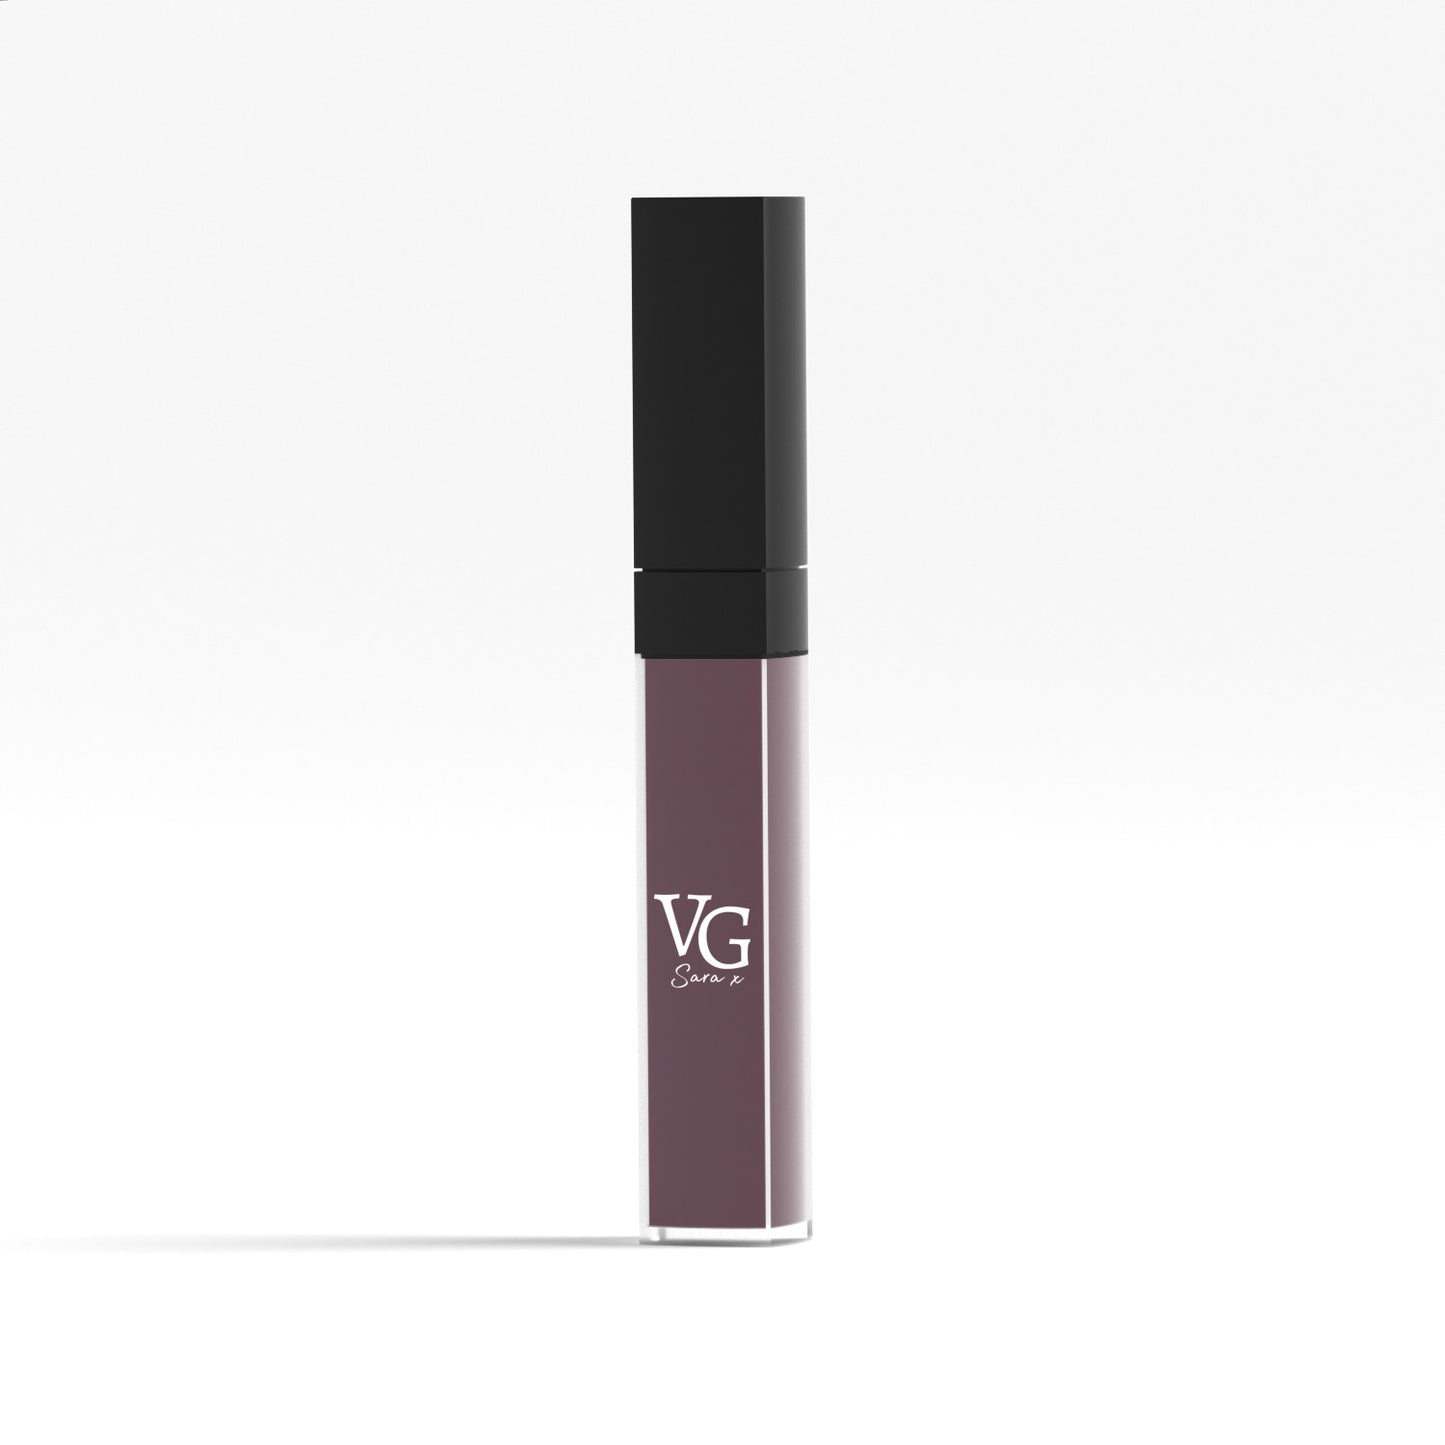 A vegan liquid lipstick in a deep purple shade